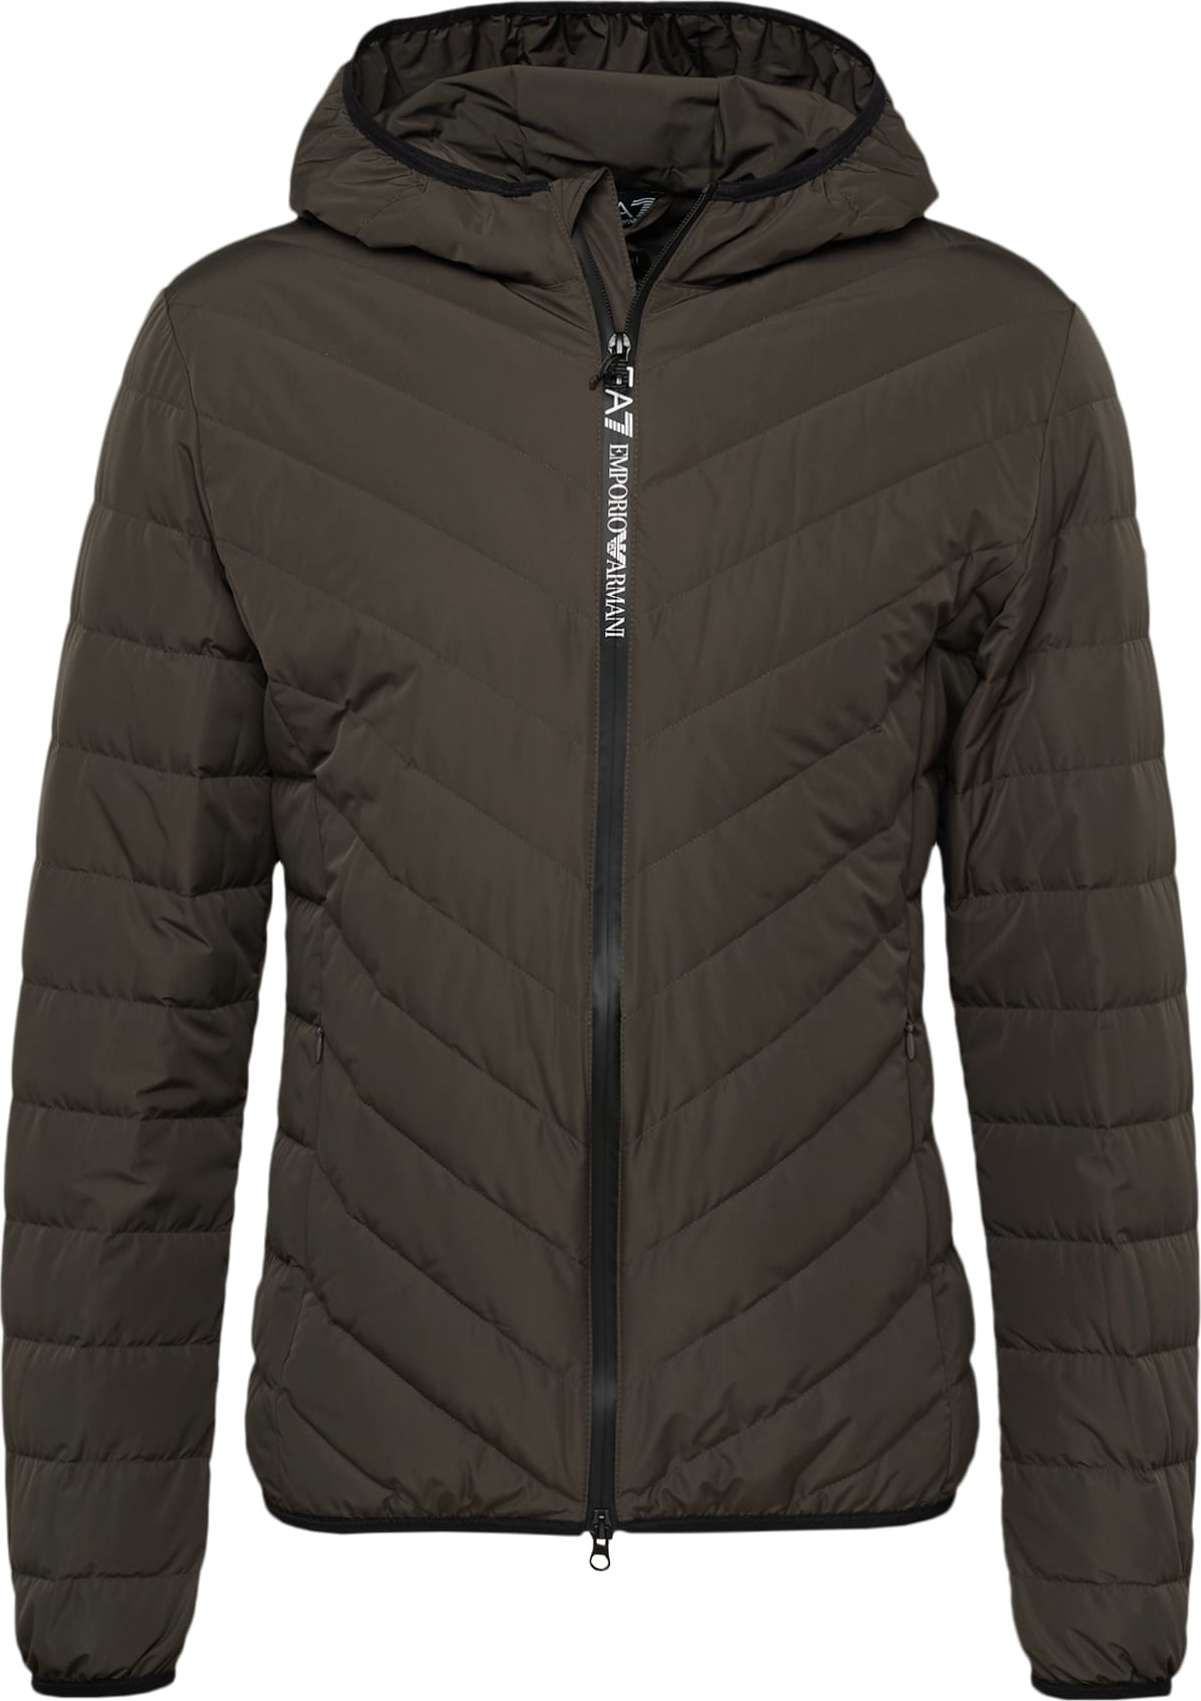 Zimní bunda EA7 Emporio Armani khaki / černá